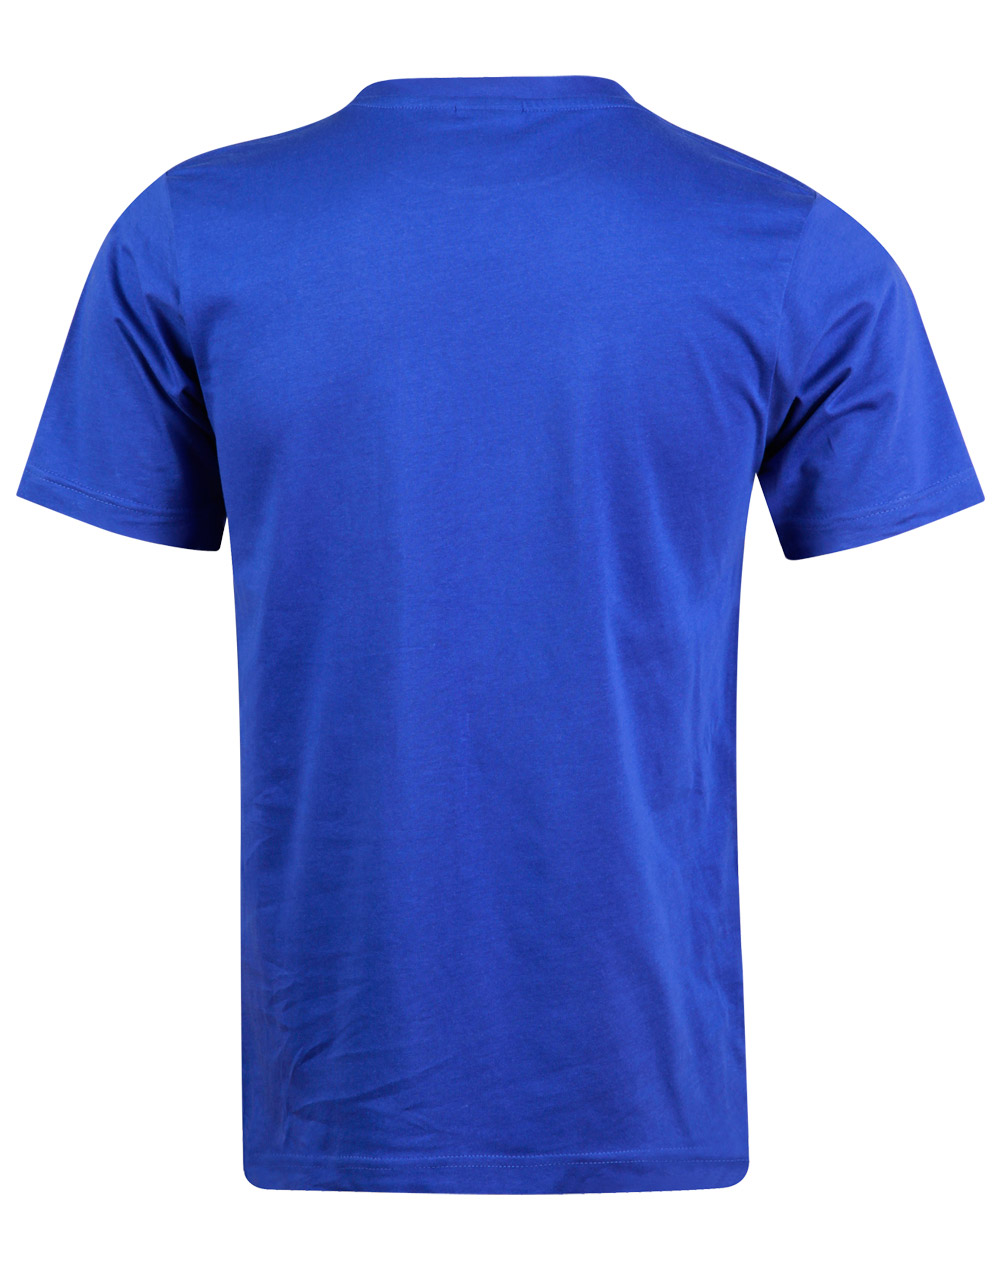 Custom (Bottle) Semi-Fitted T-Shirts Men's Cotton Online in Perh Australia